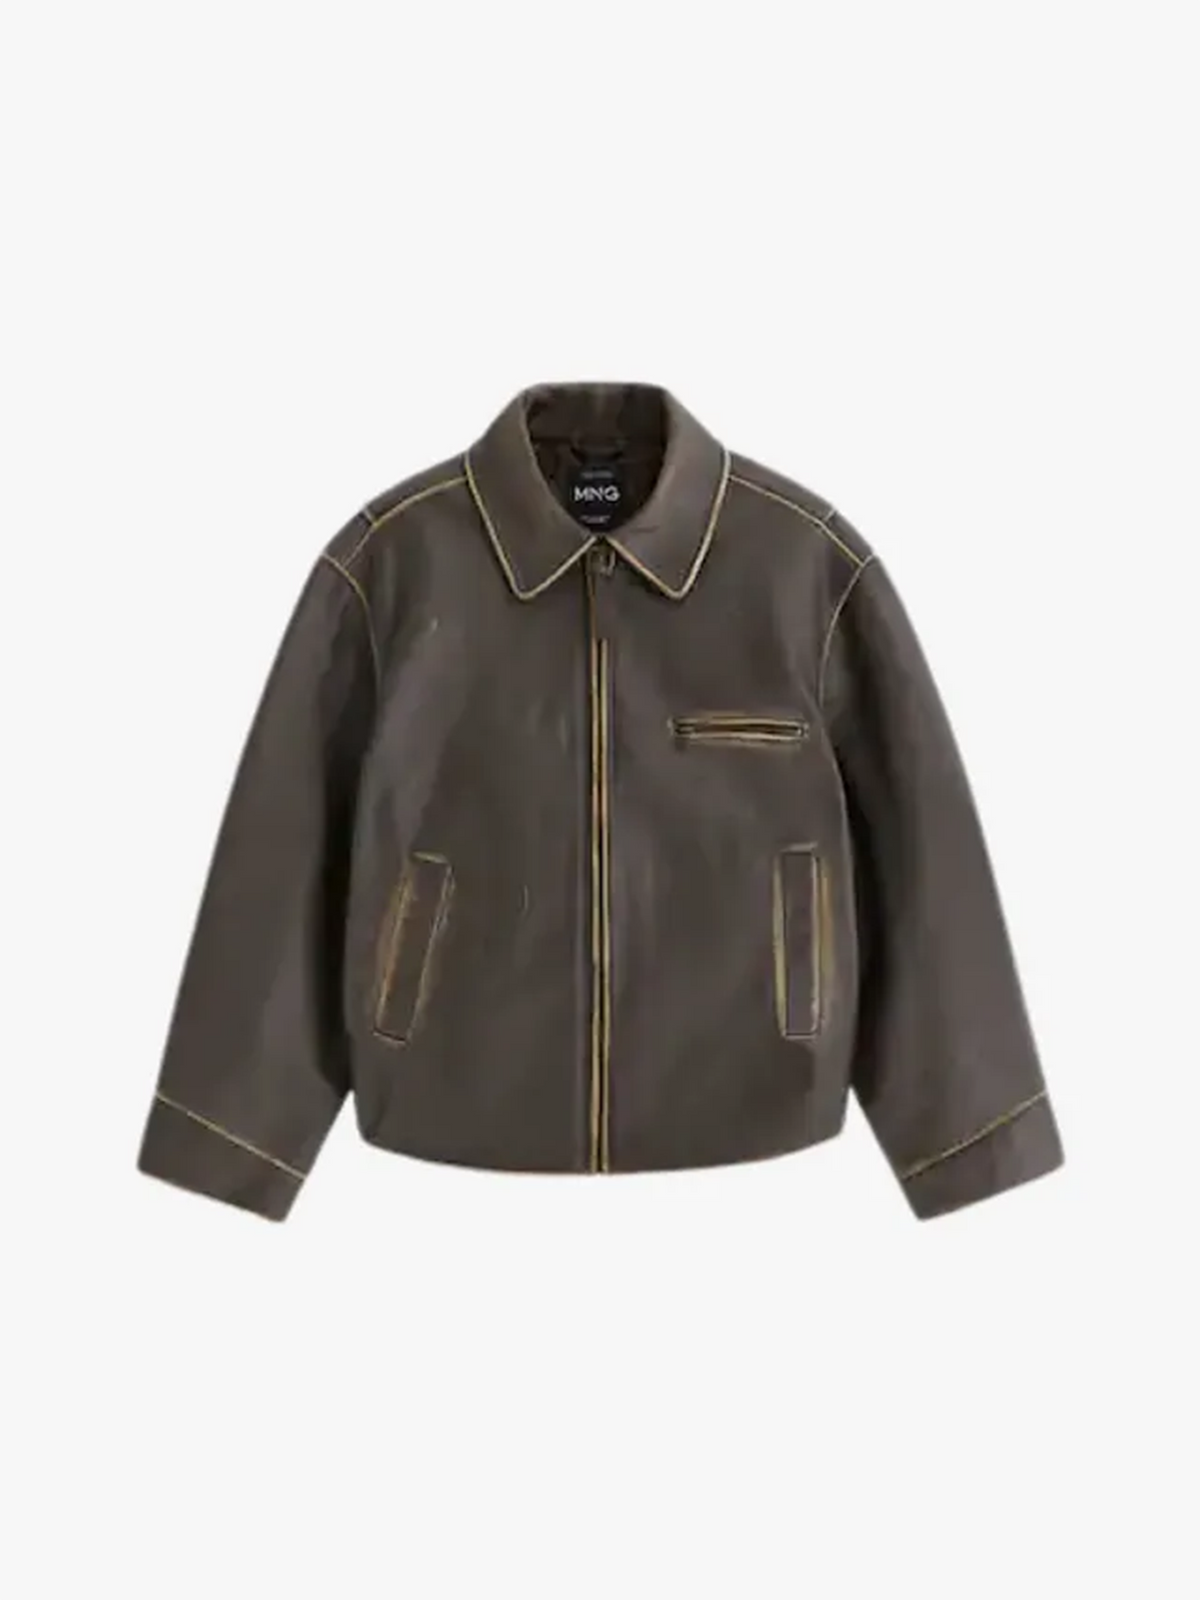 Premium Majestic Faded Leather Jacket